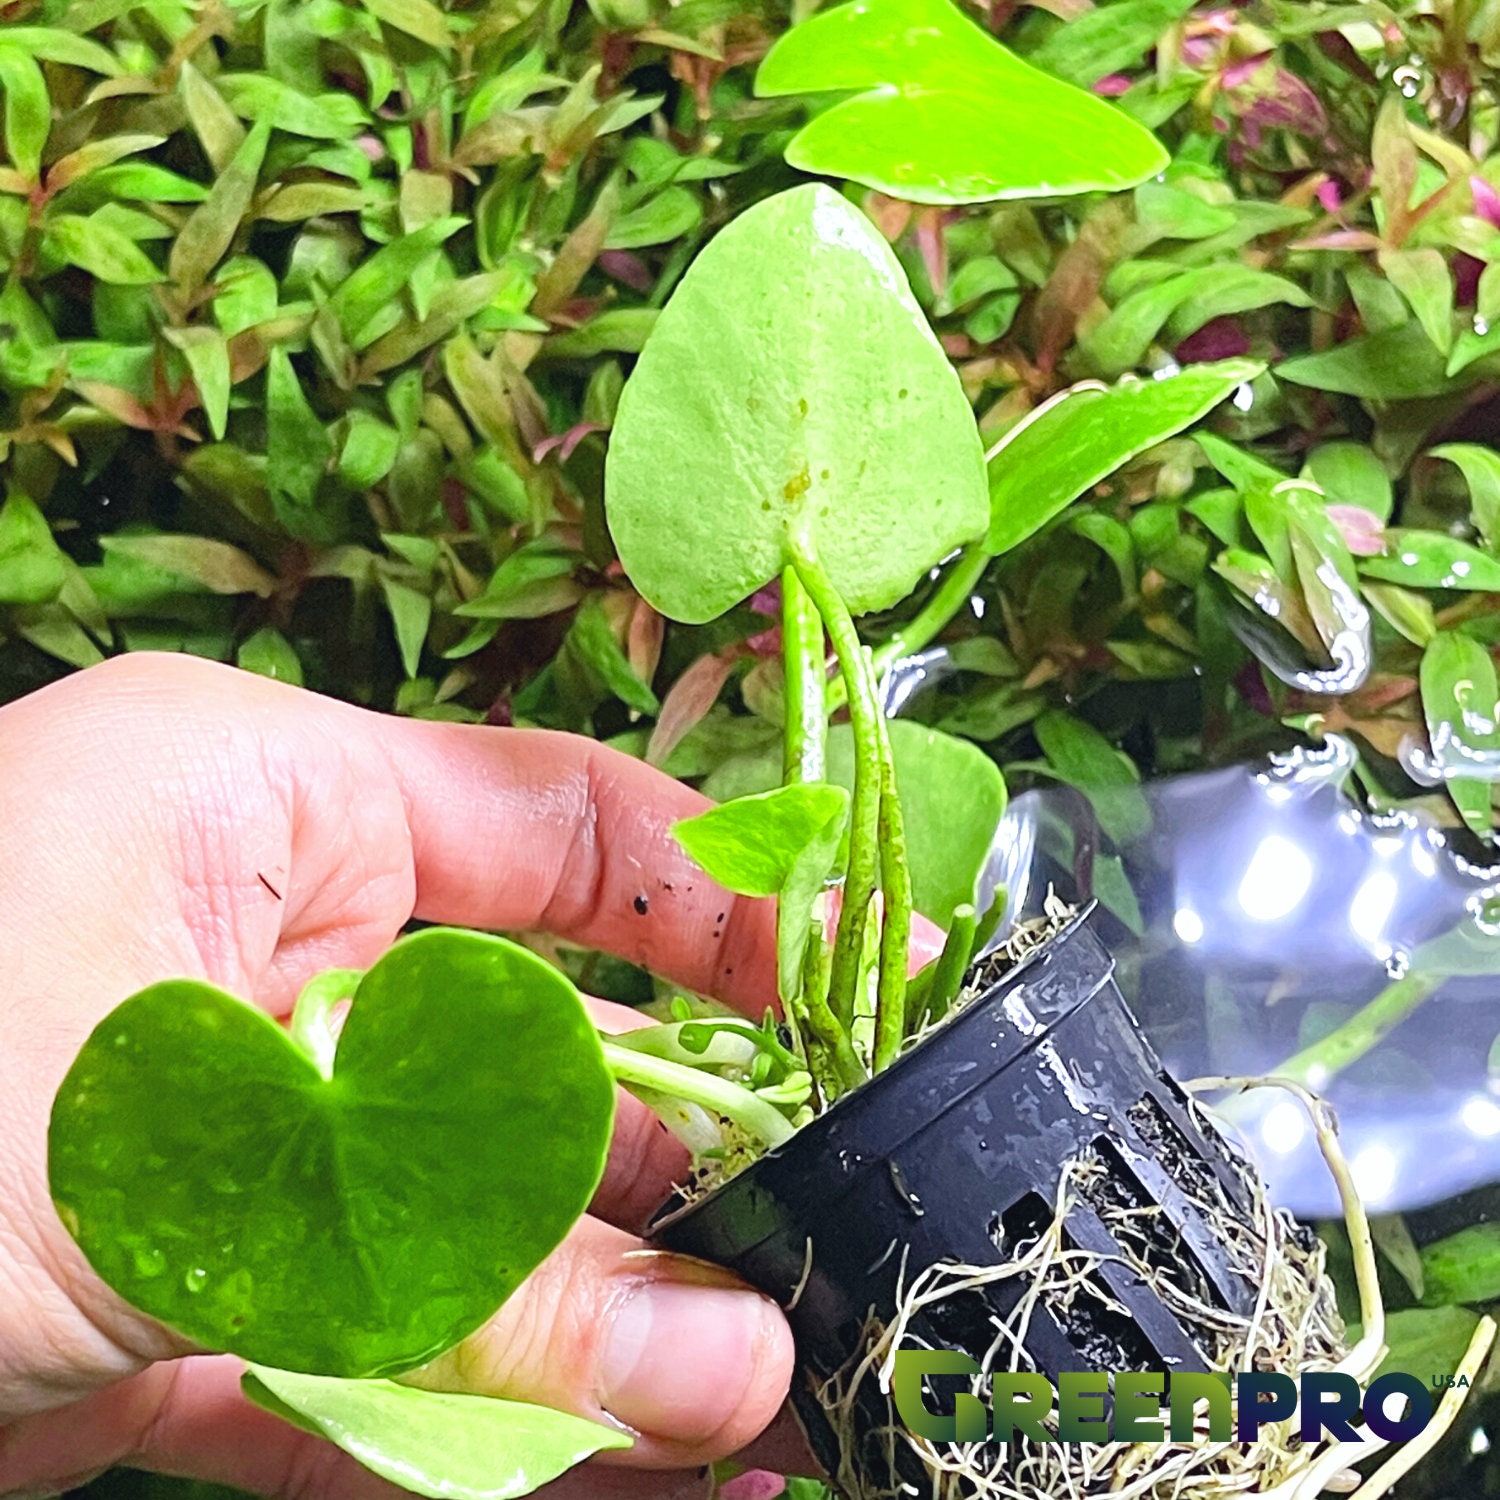 Greenpro L Java Moss Balls Vesicularia Dubyana US Grow Live